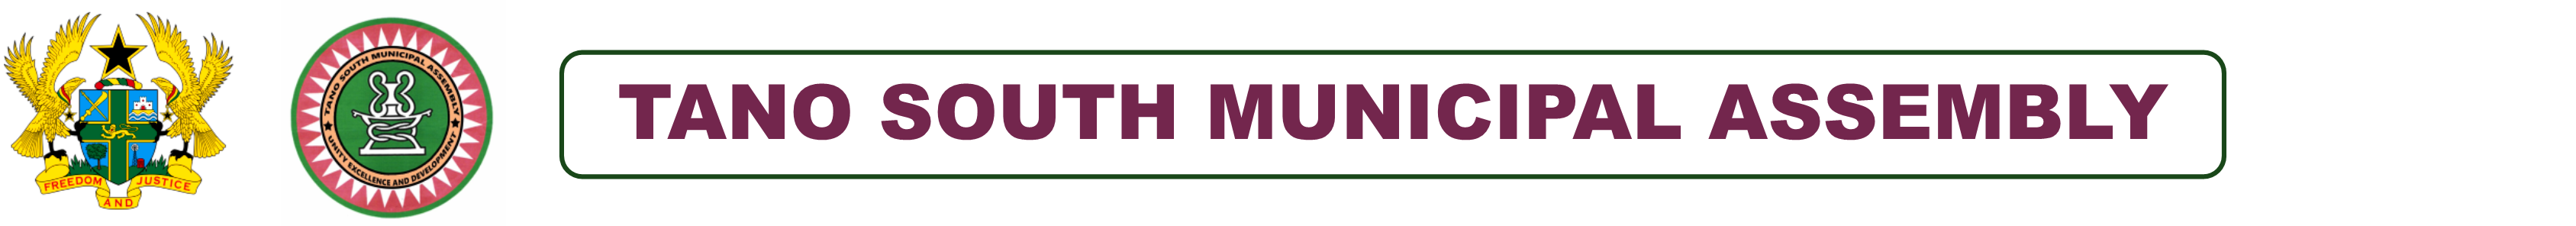 Tano South Municipal Assembly Logo